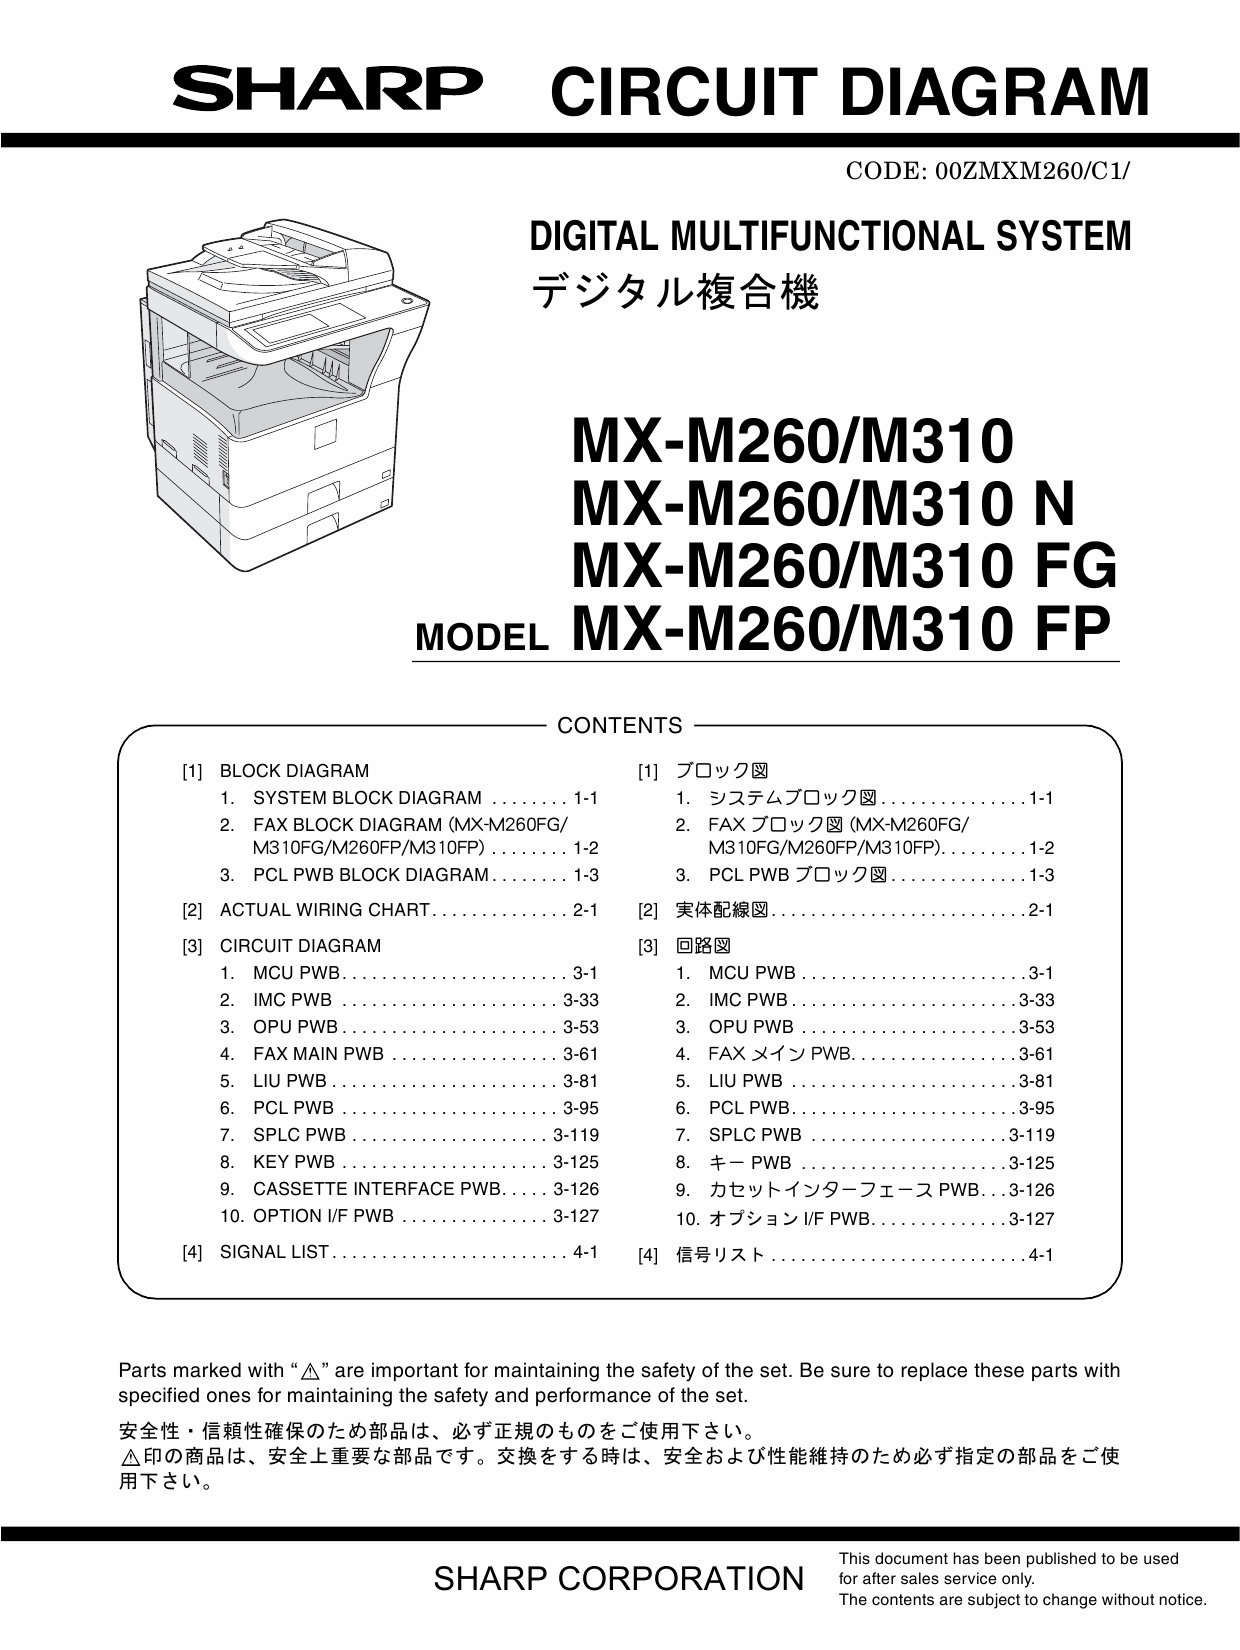 SHARP MX M260 M310 N FG FP Circuit Diagrams-1